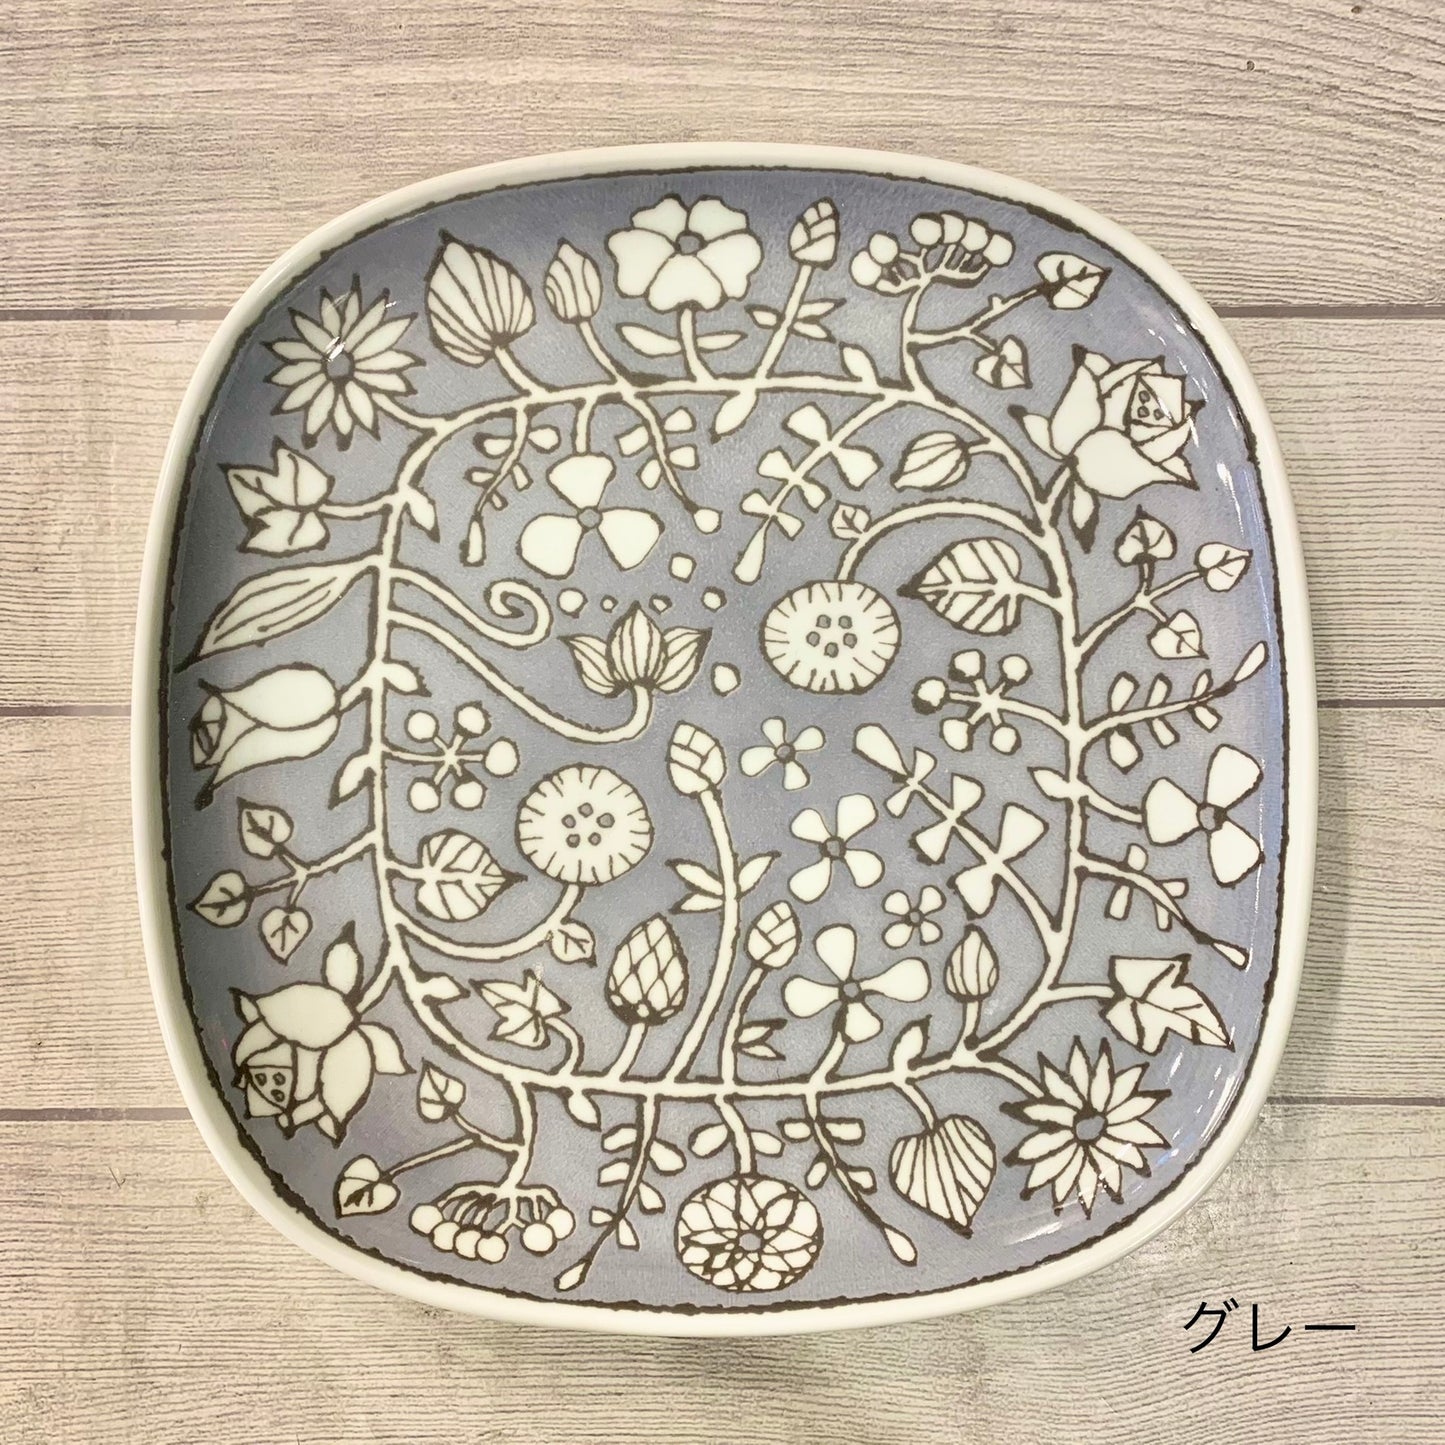 [Hasami ware] [Wayama] [Flower parade] [Large plate] Plate retro cute